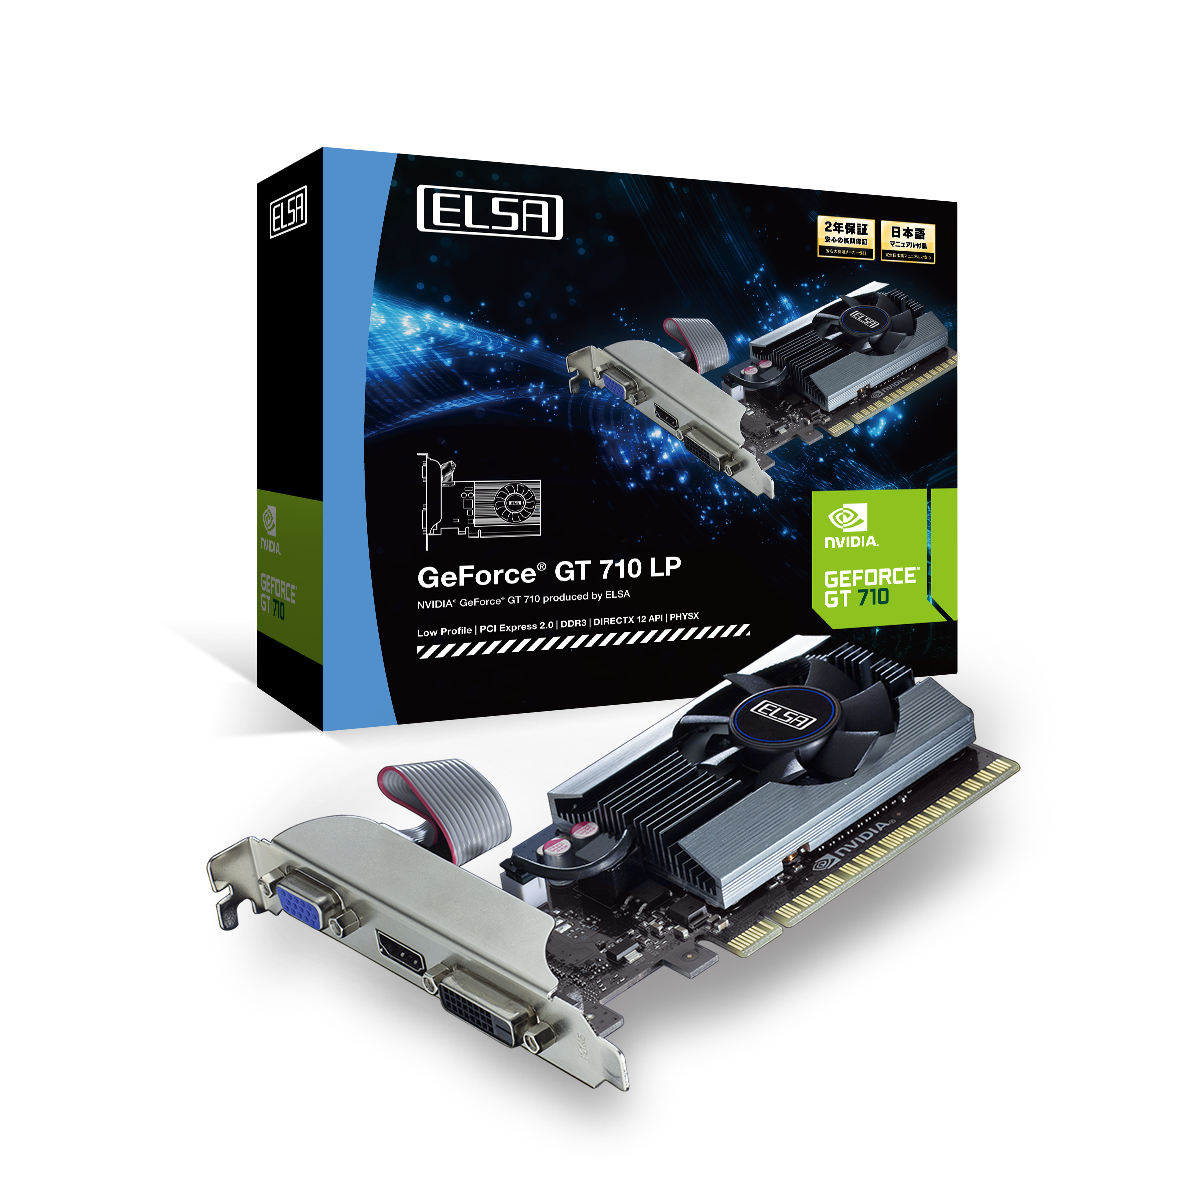 ELSA GeForce GT 710 LP 2GB - 株式会社 エルザ ジャパン